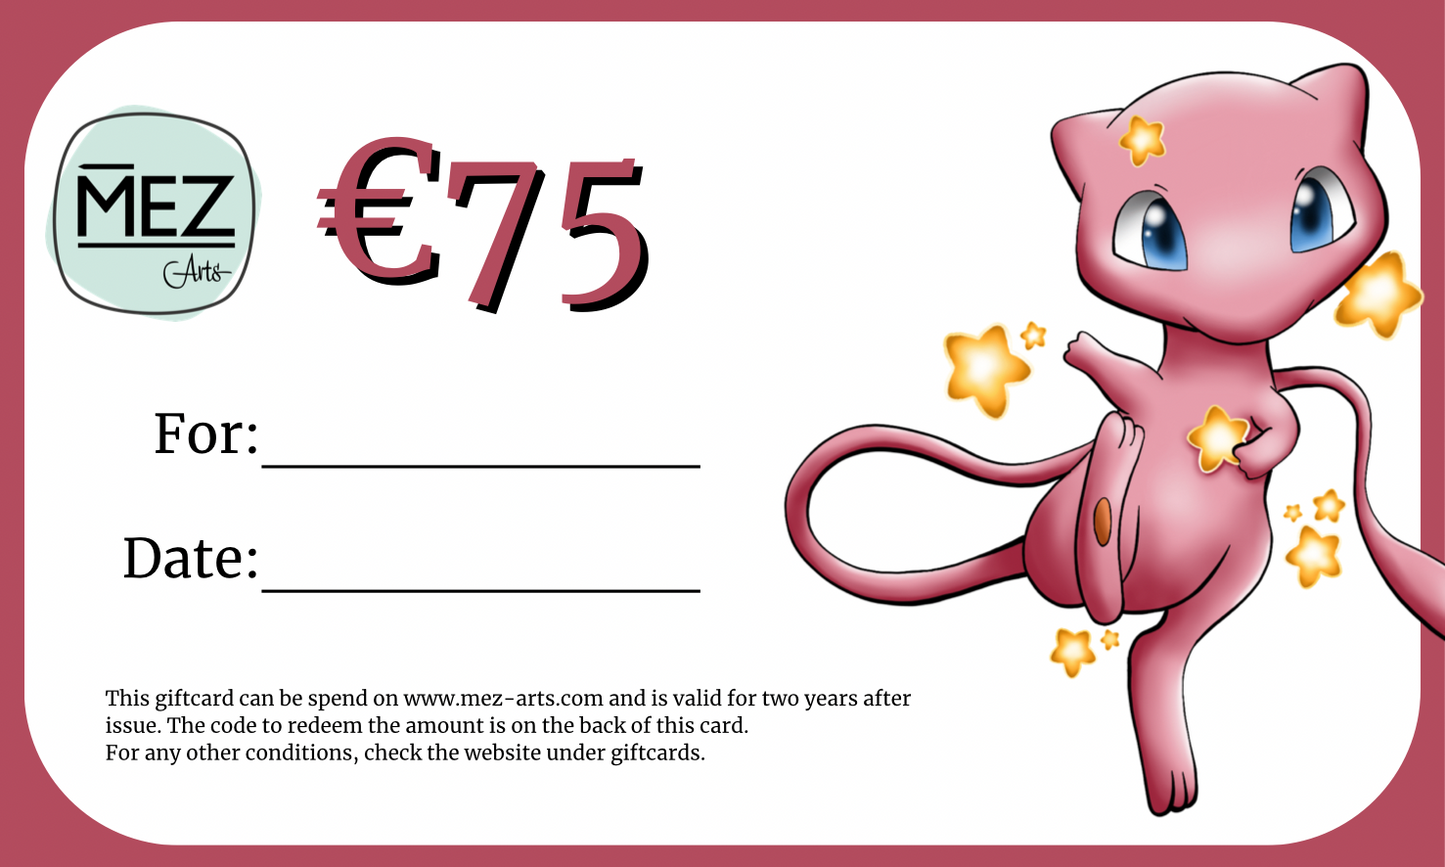 €75 gift card